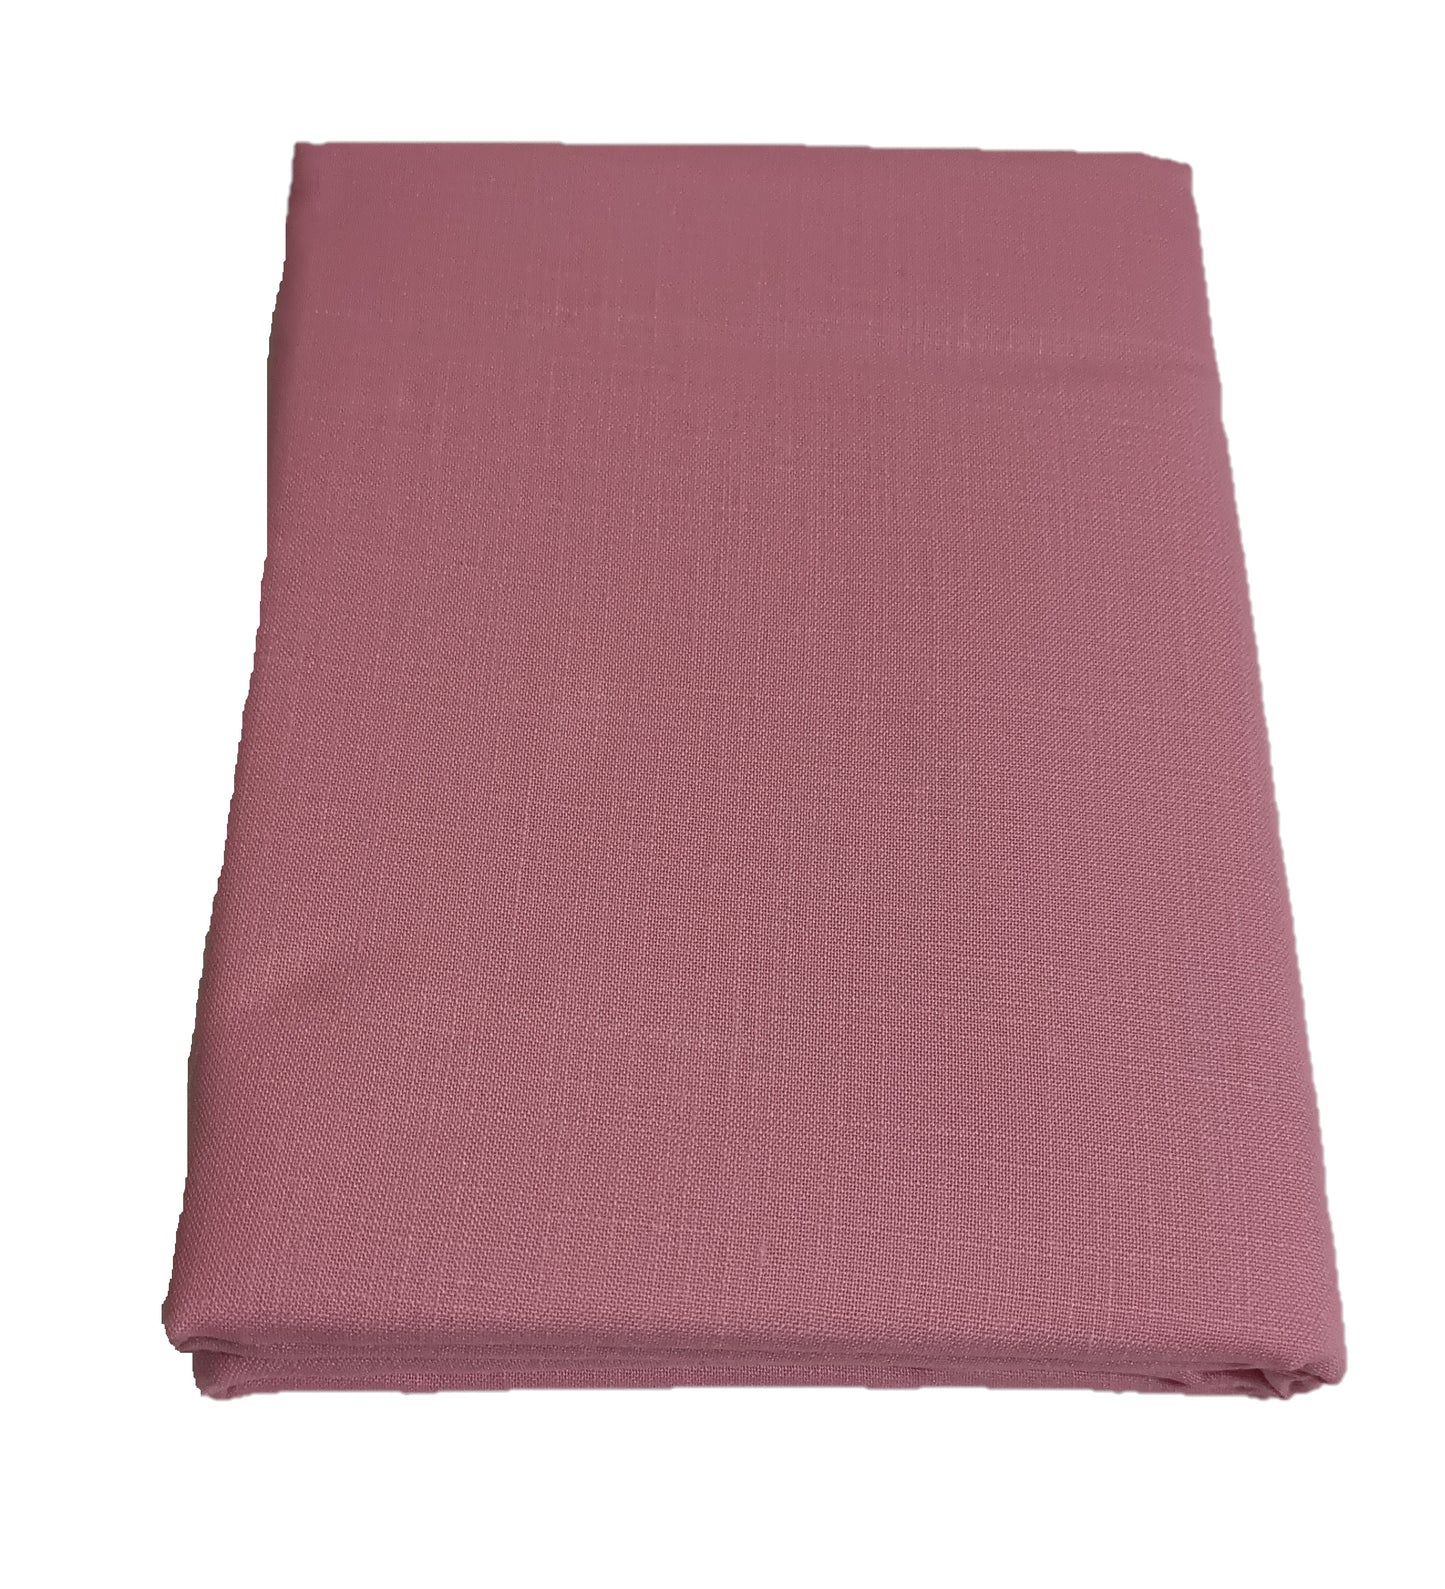 Men's Cotton Solid Shirt Fabric (Formal, Light Pink)